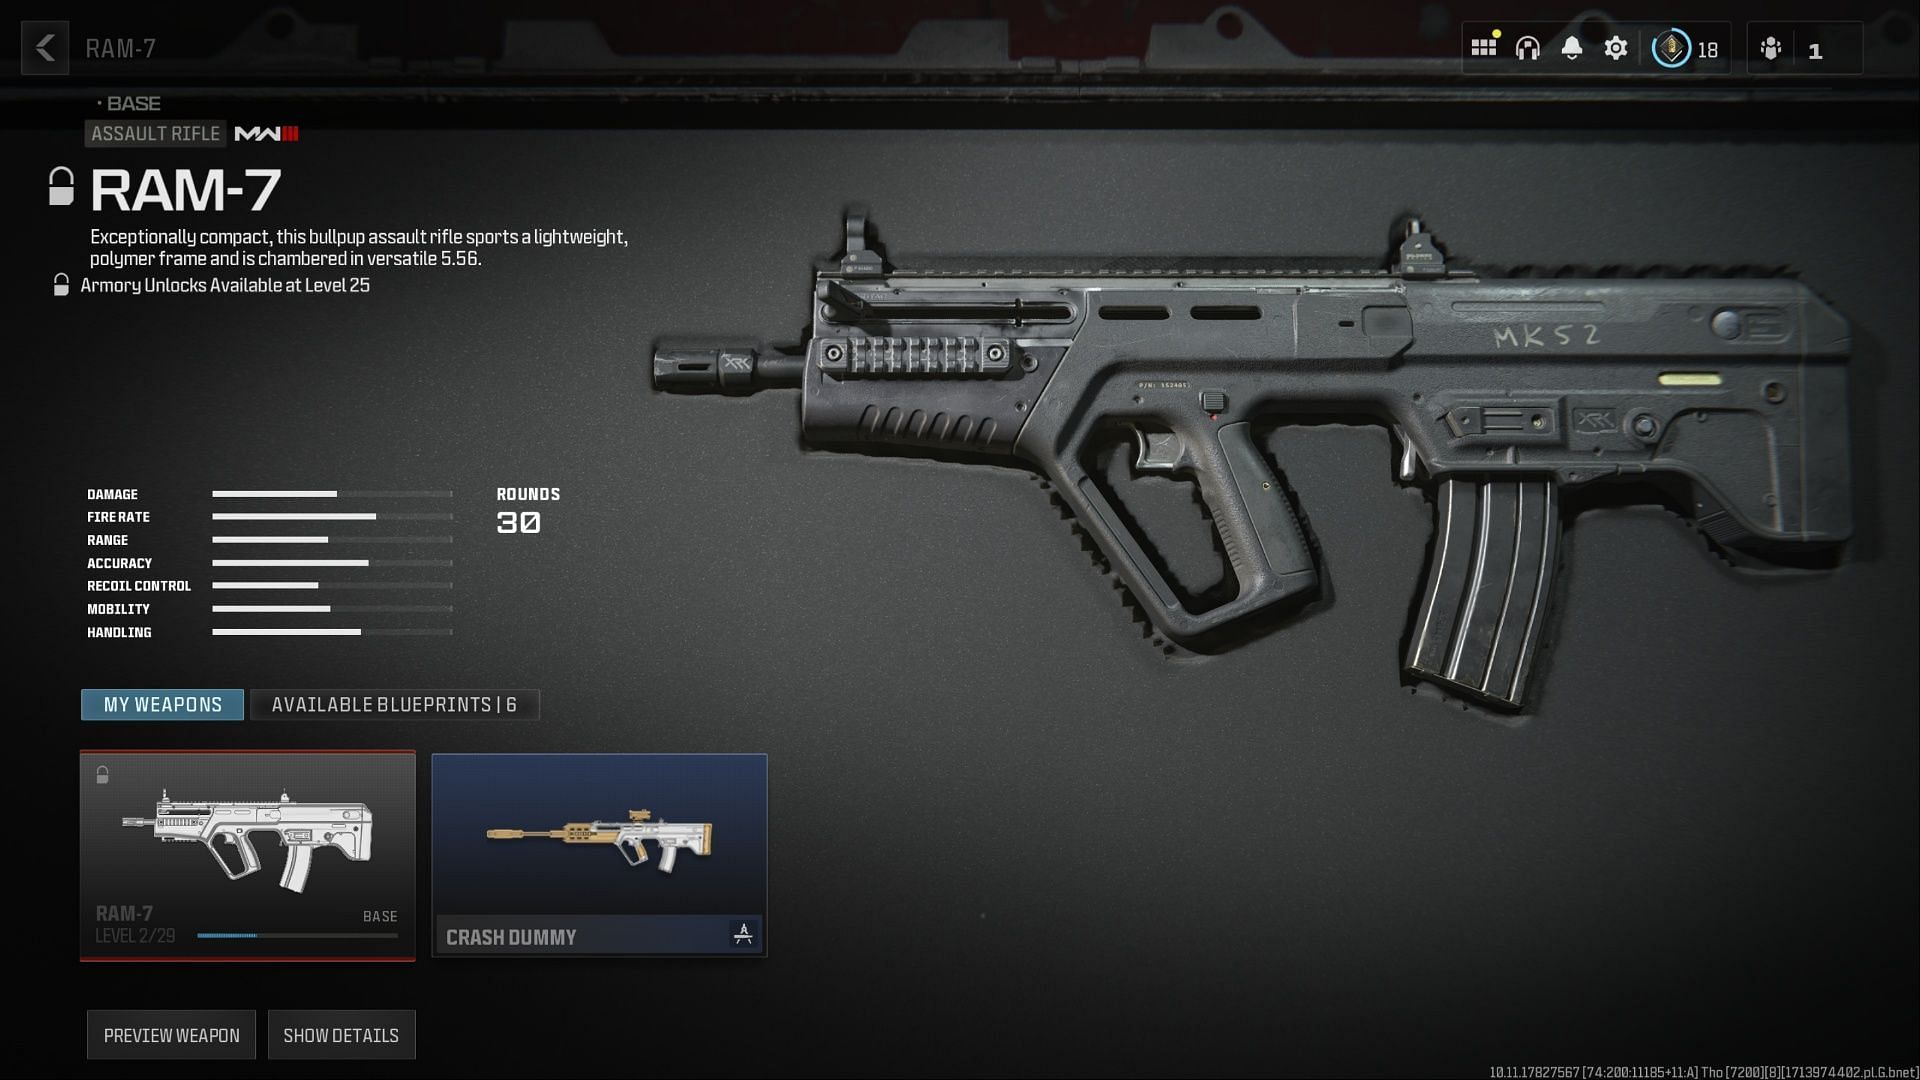 RAM-7 assault rifle (Image via Activision)